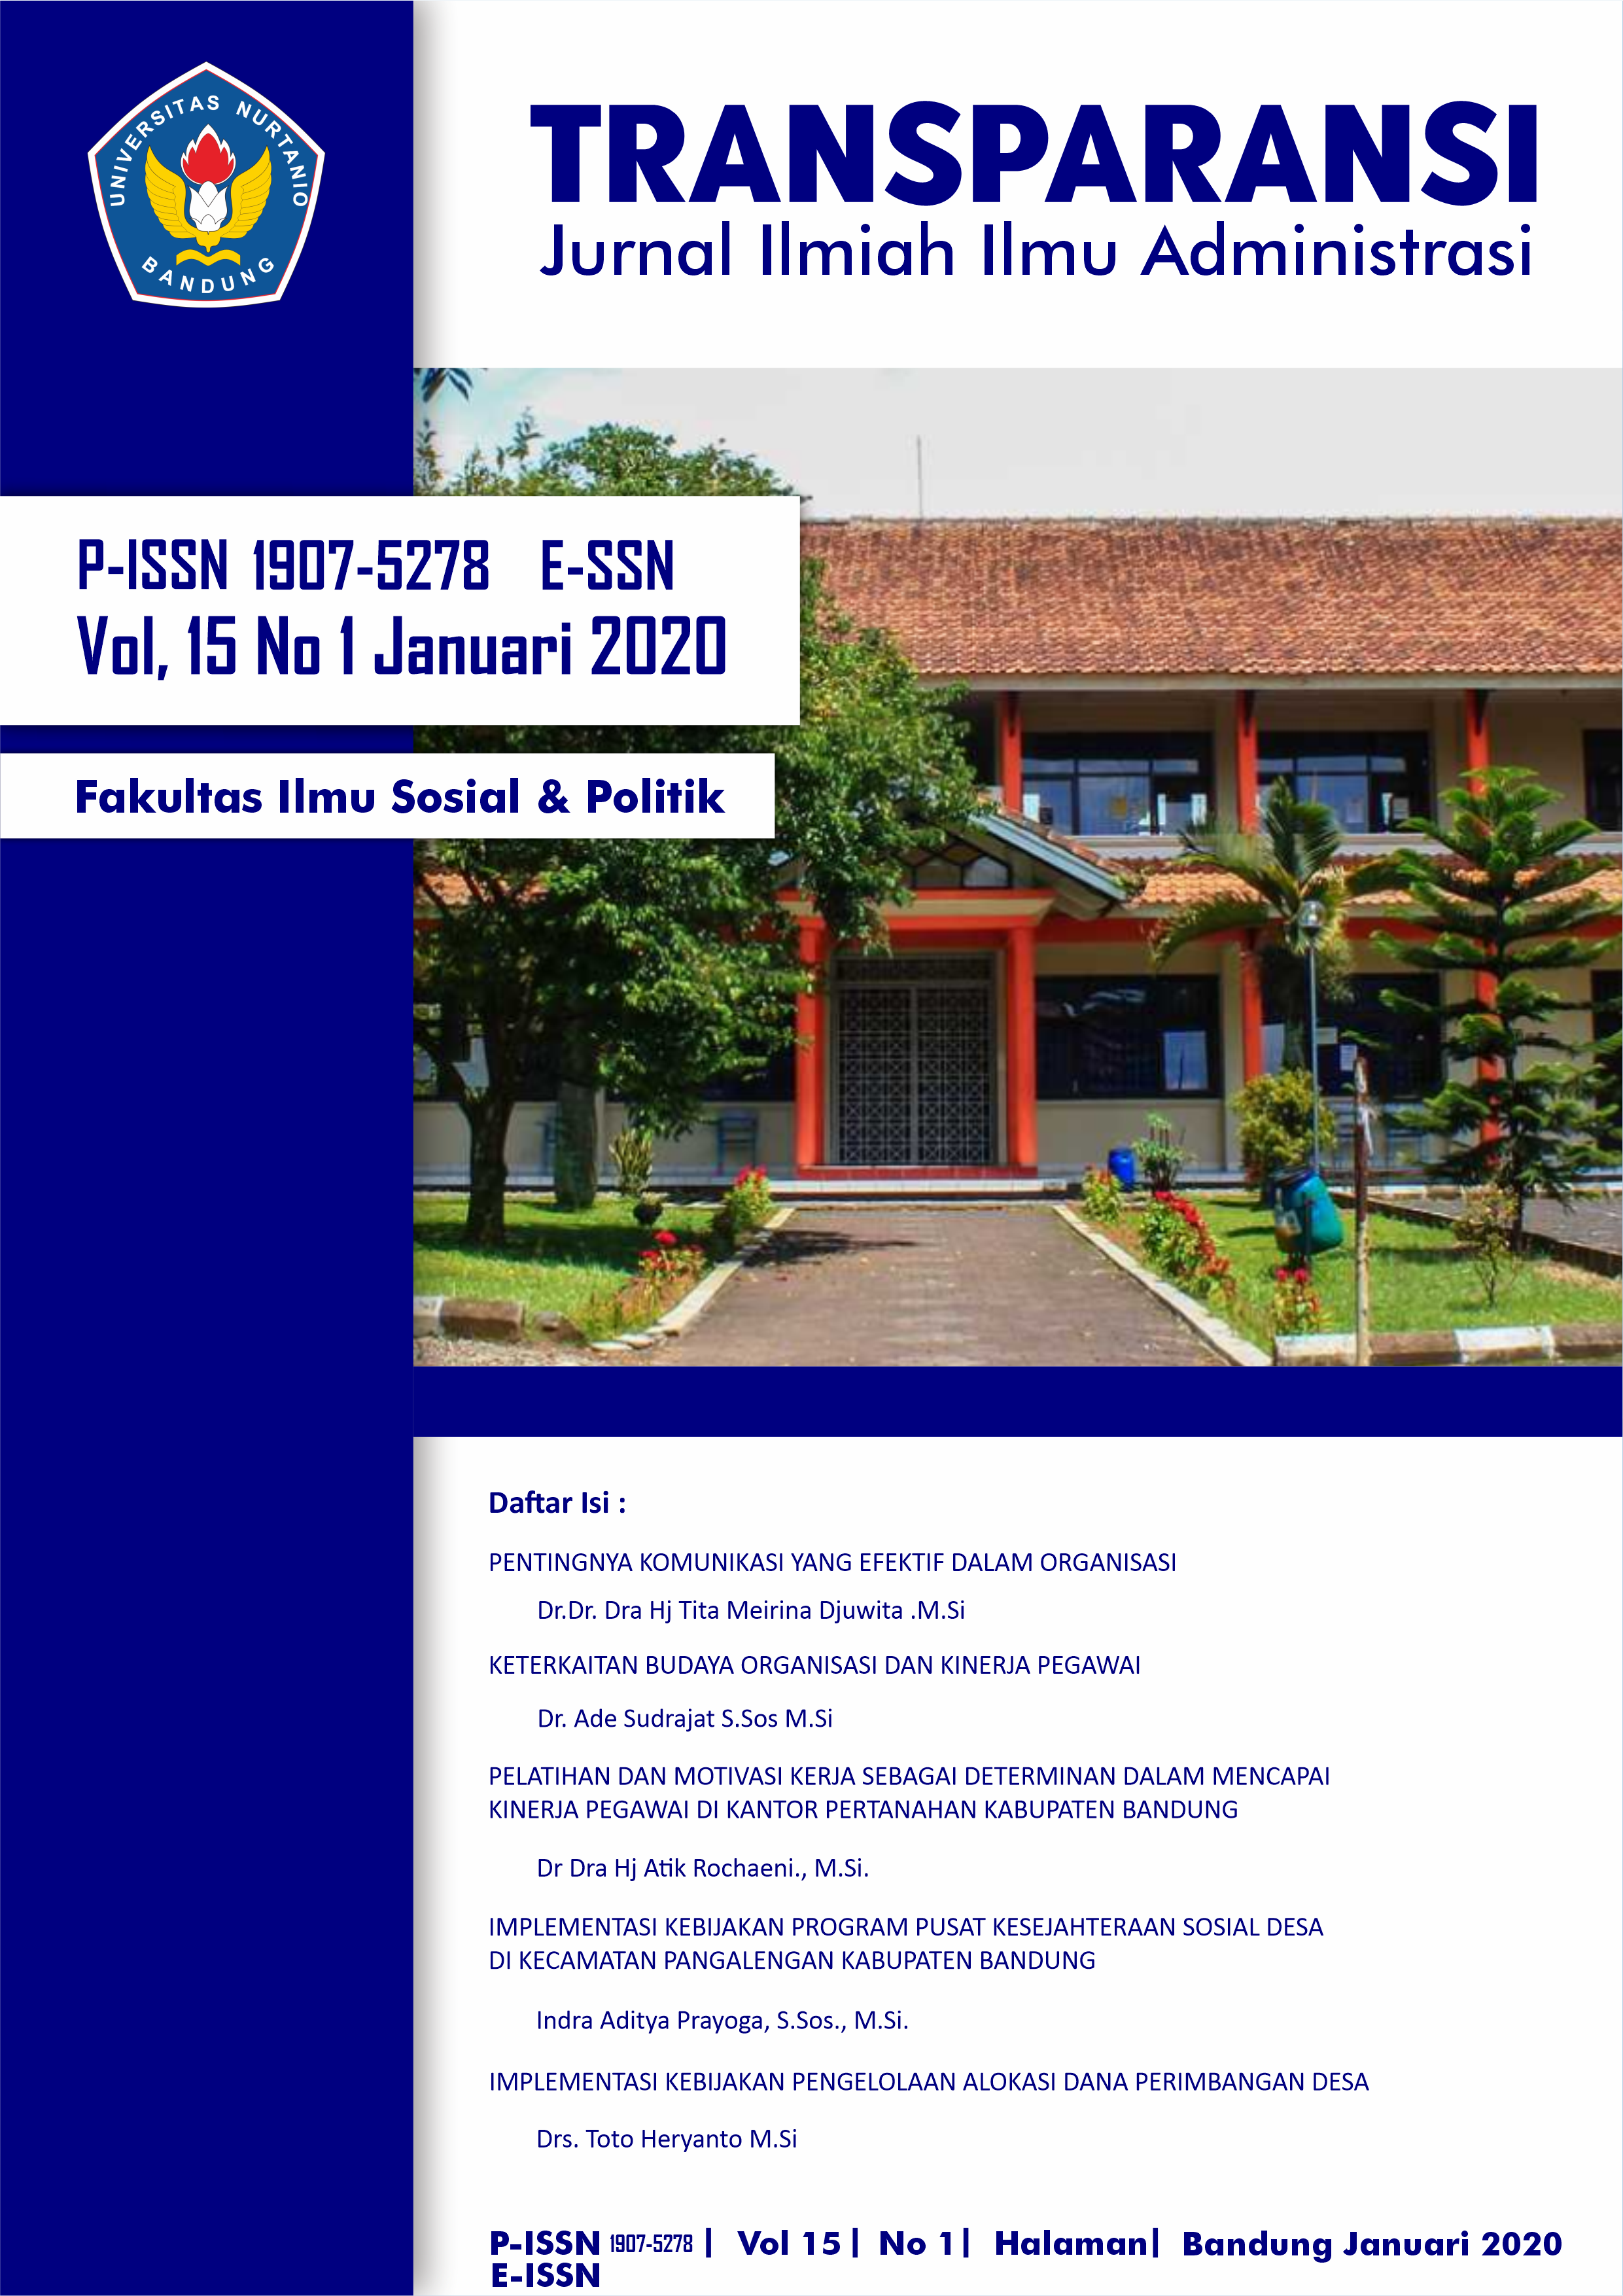 					Lihat Vol 15 No 1 (2020): TRANSPARANSI Jurnal Ilmu Administrasi
				